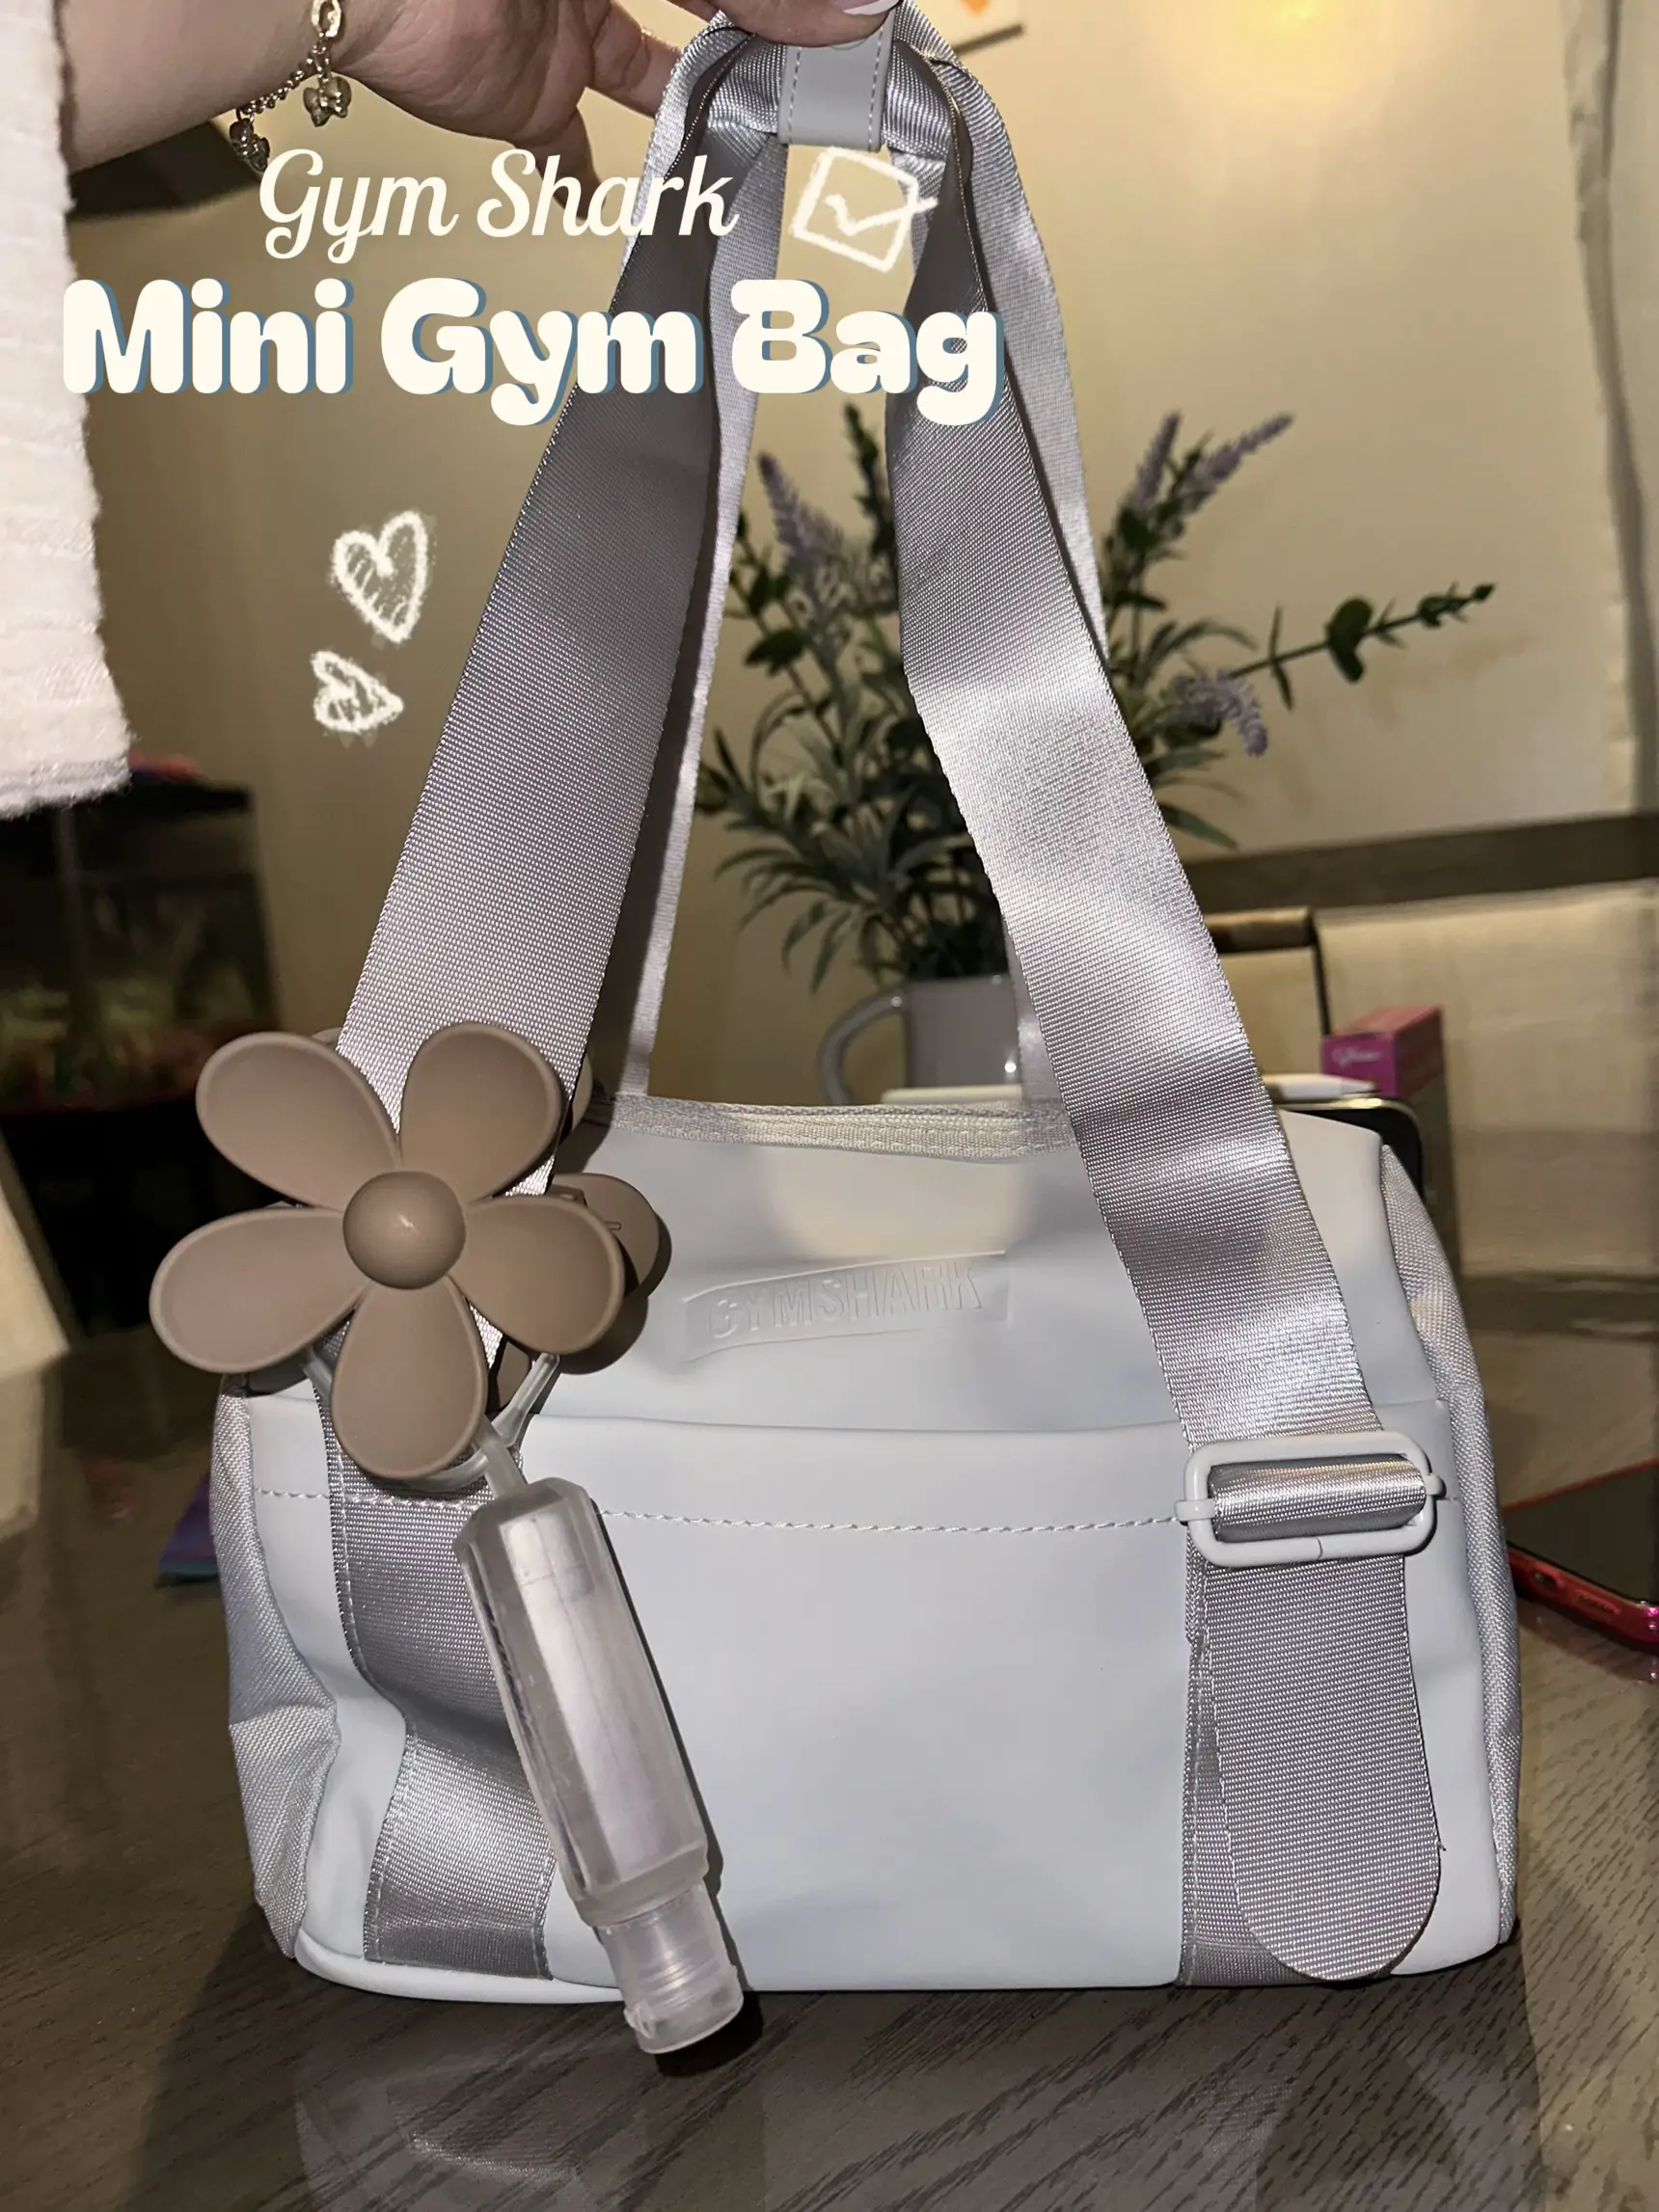 GYM SHARK Mini Everyday Gym Bag ✨, Gallery posted by MariaStephanie